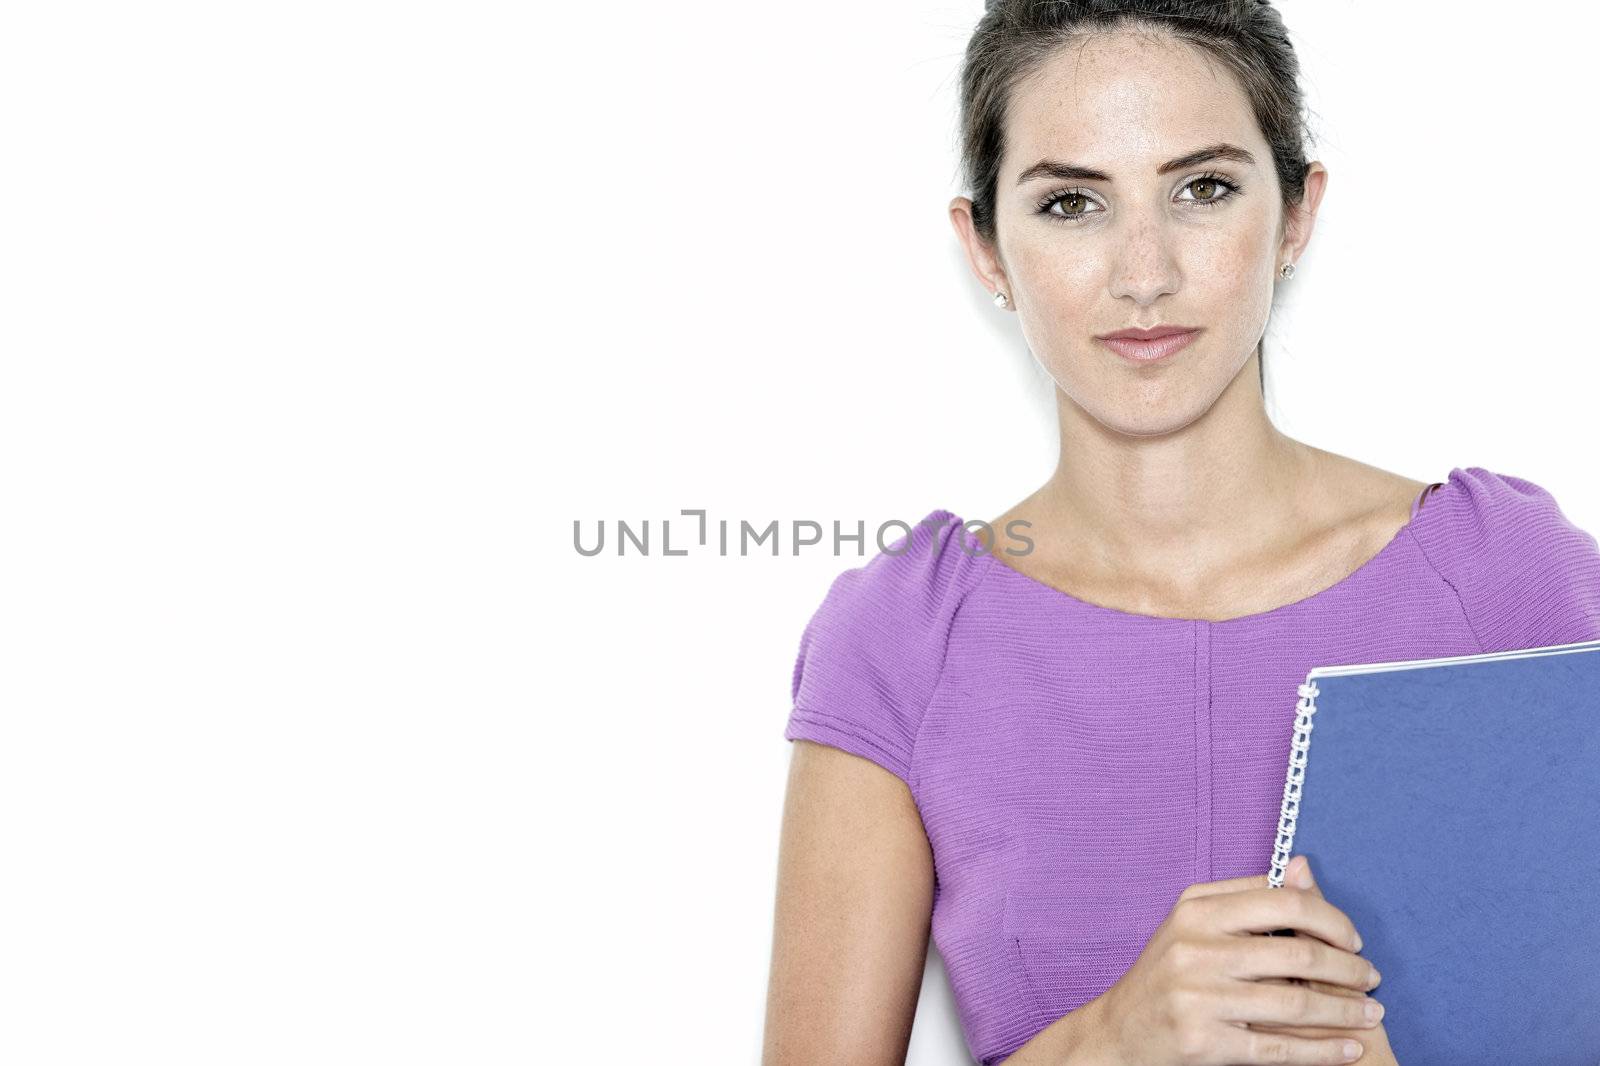 Professional business woman holding blue folders in a purple smart dress